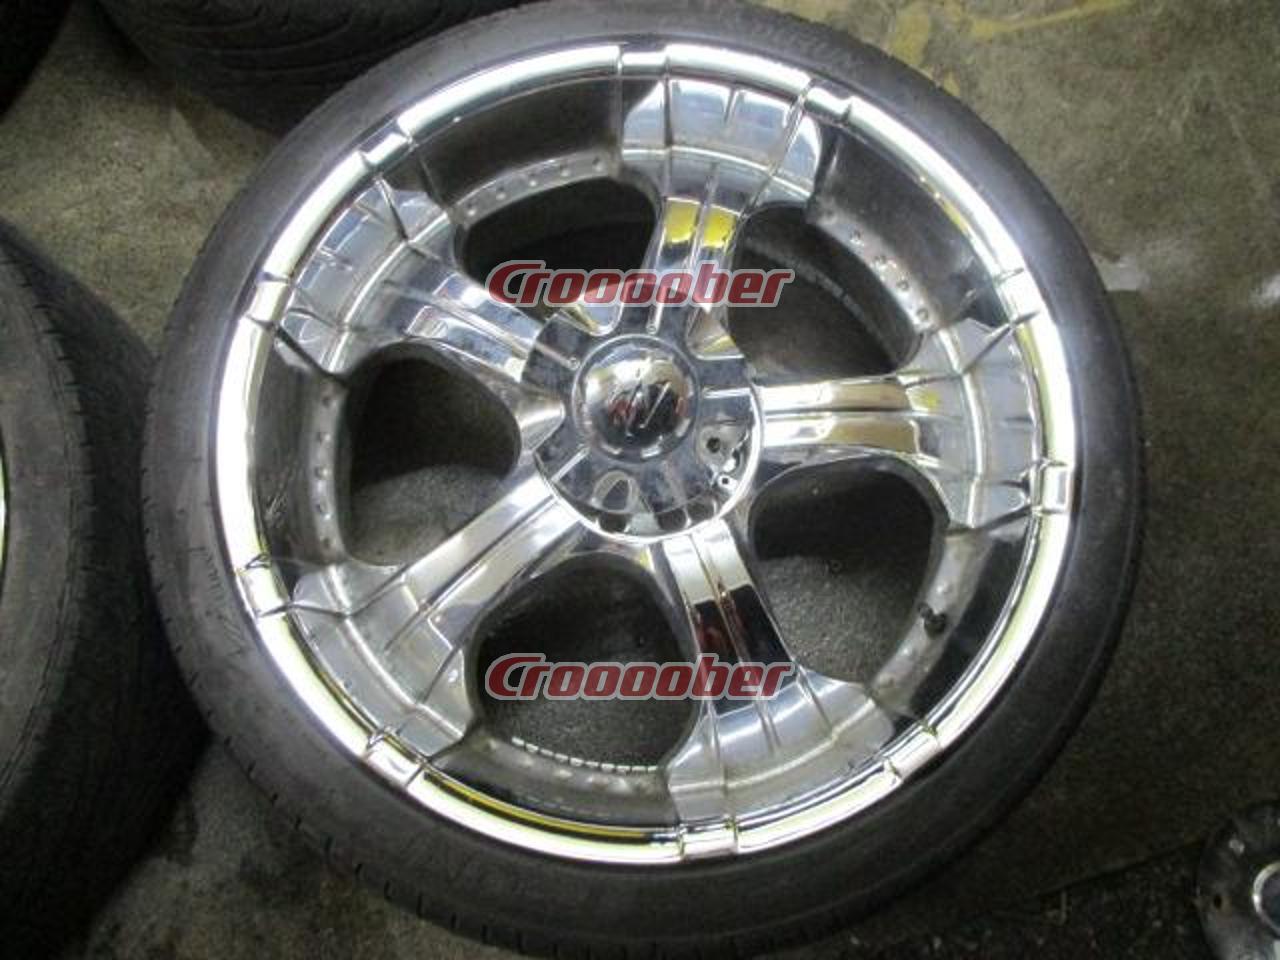 Wheel Only] ZINIK Z1 SHOGUN + China Tire - 22 Inch Rim & Tire Sets 